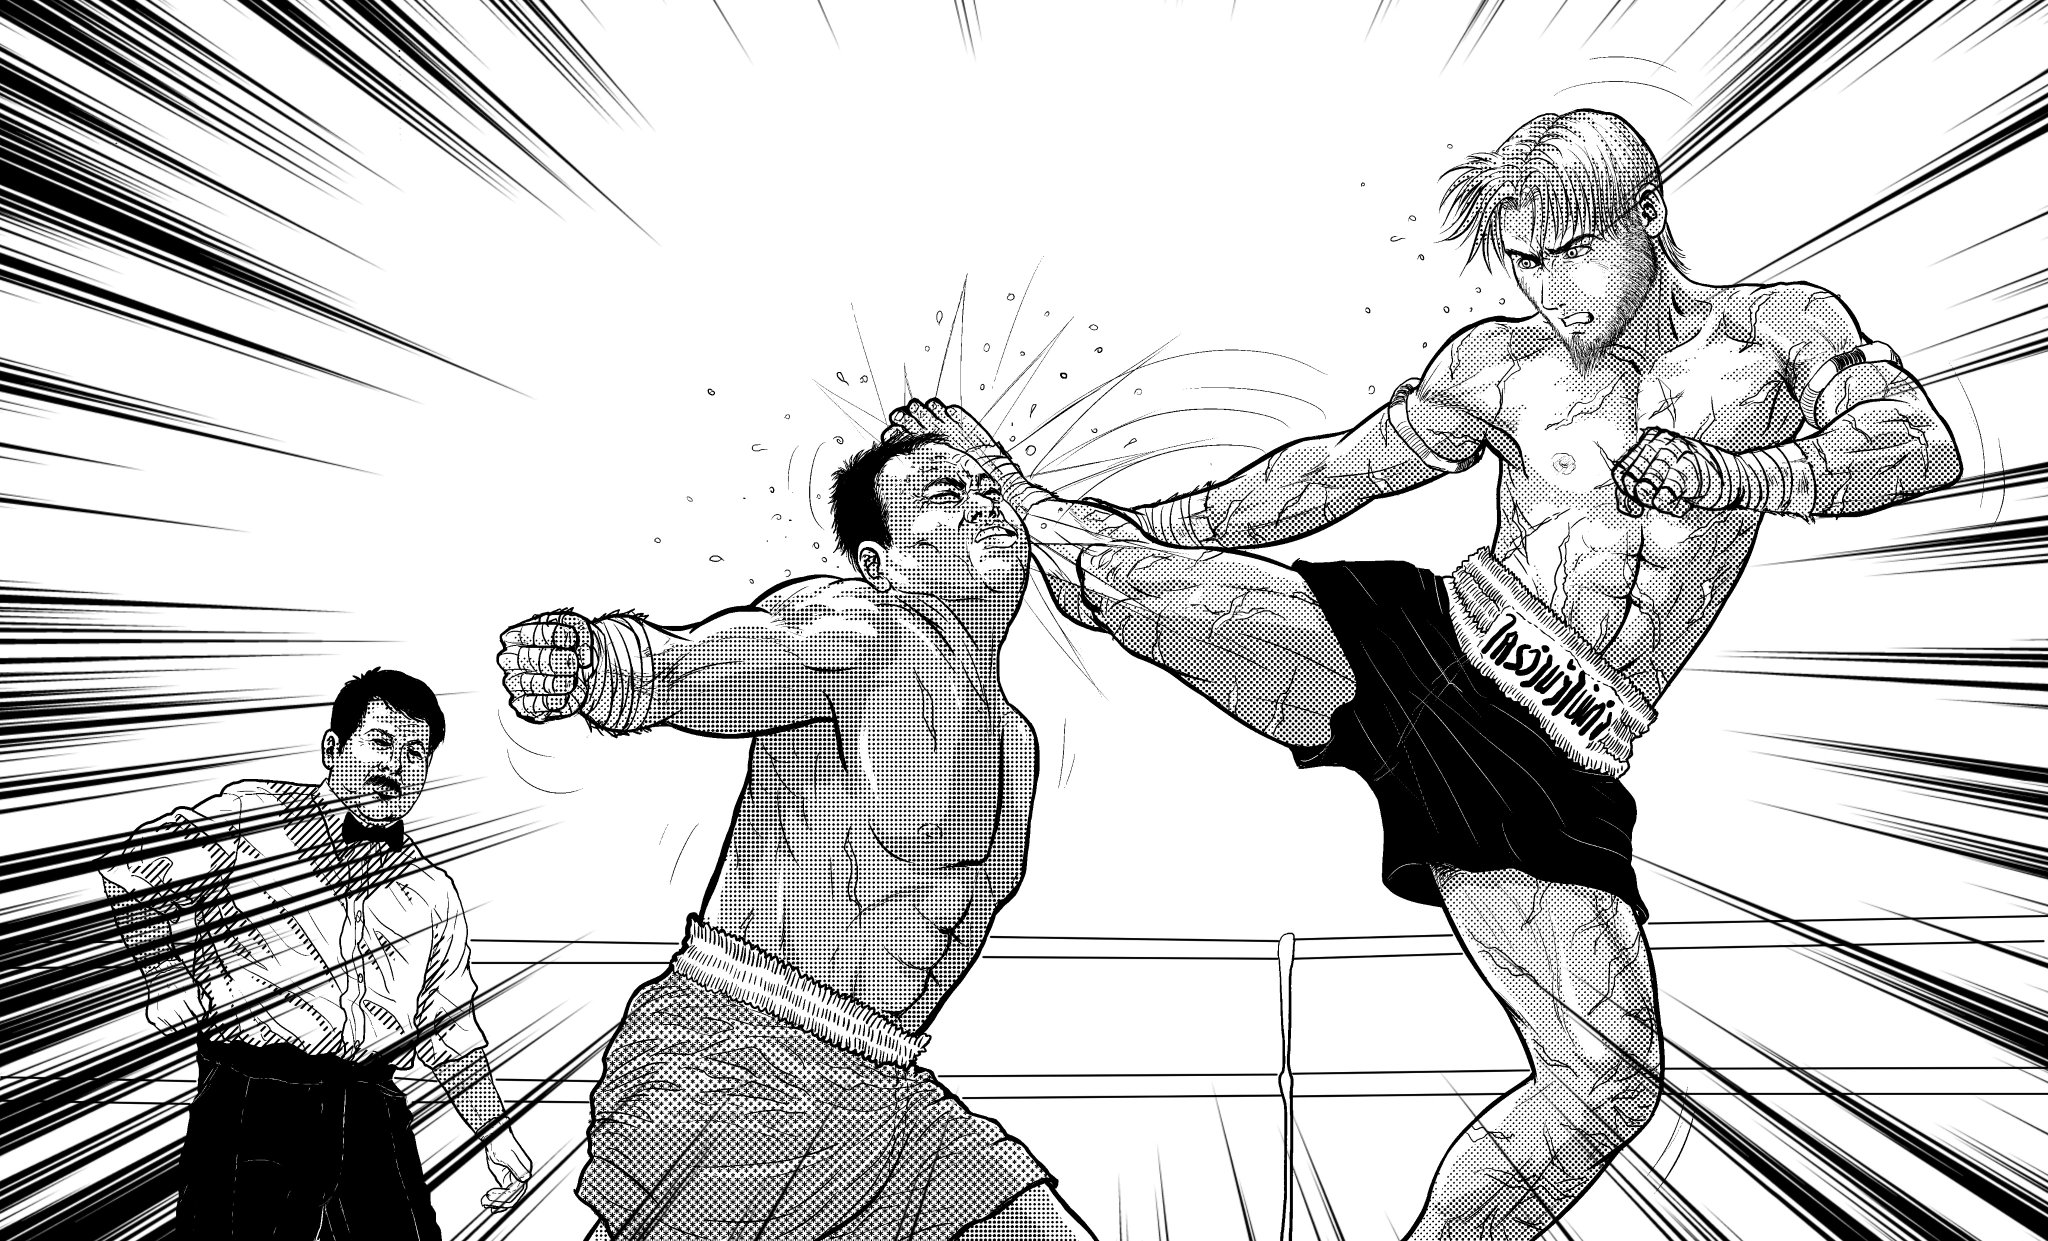 “Here I bring you one more illustration of fighting!
#Manga #illust...